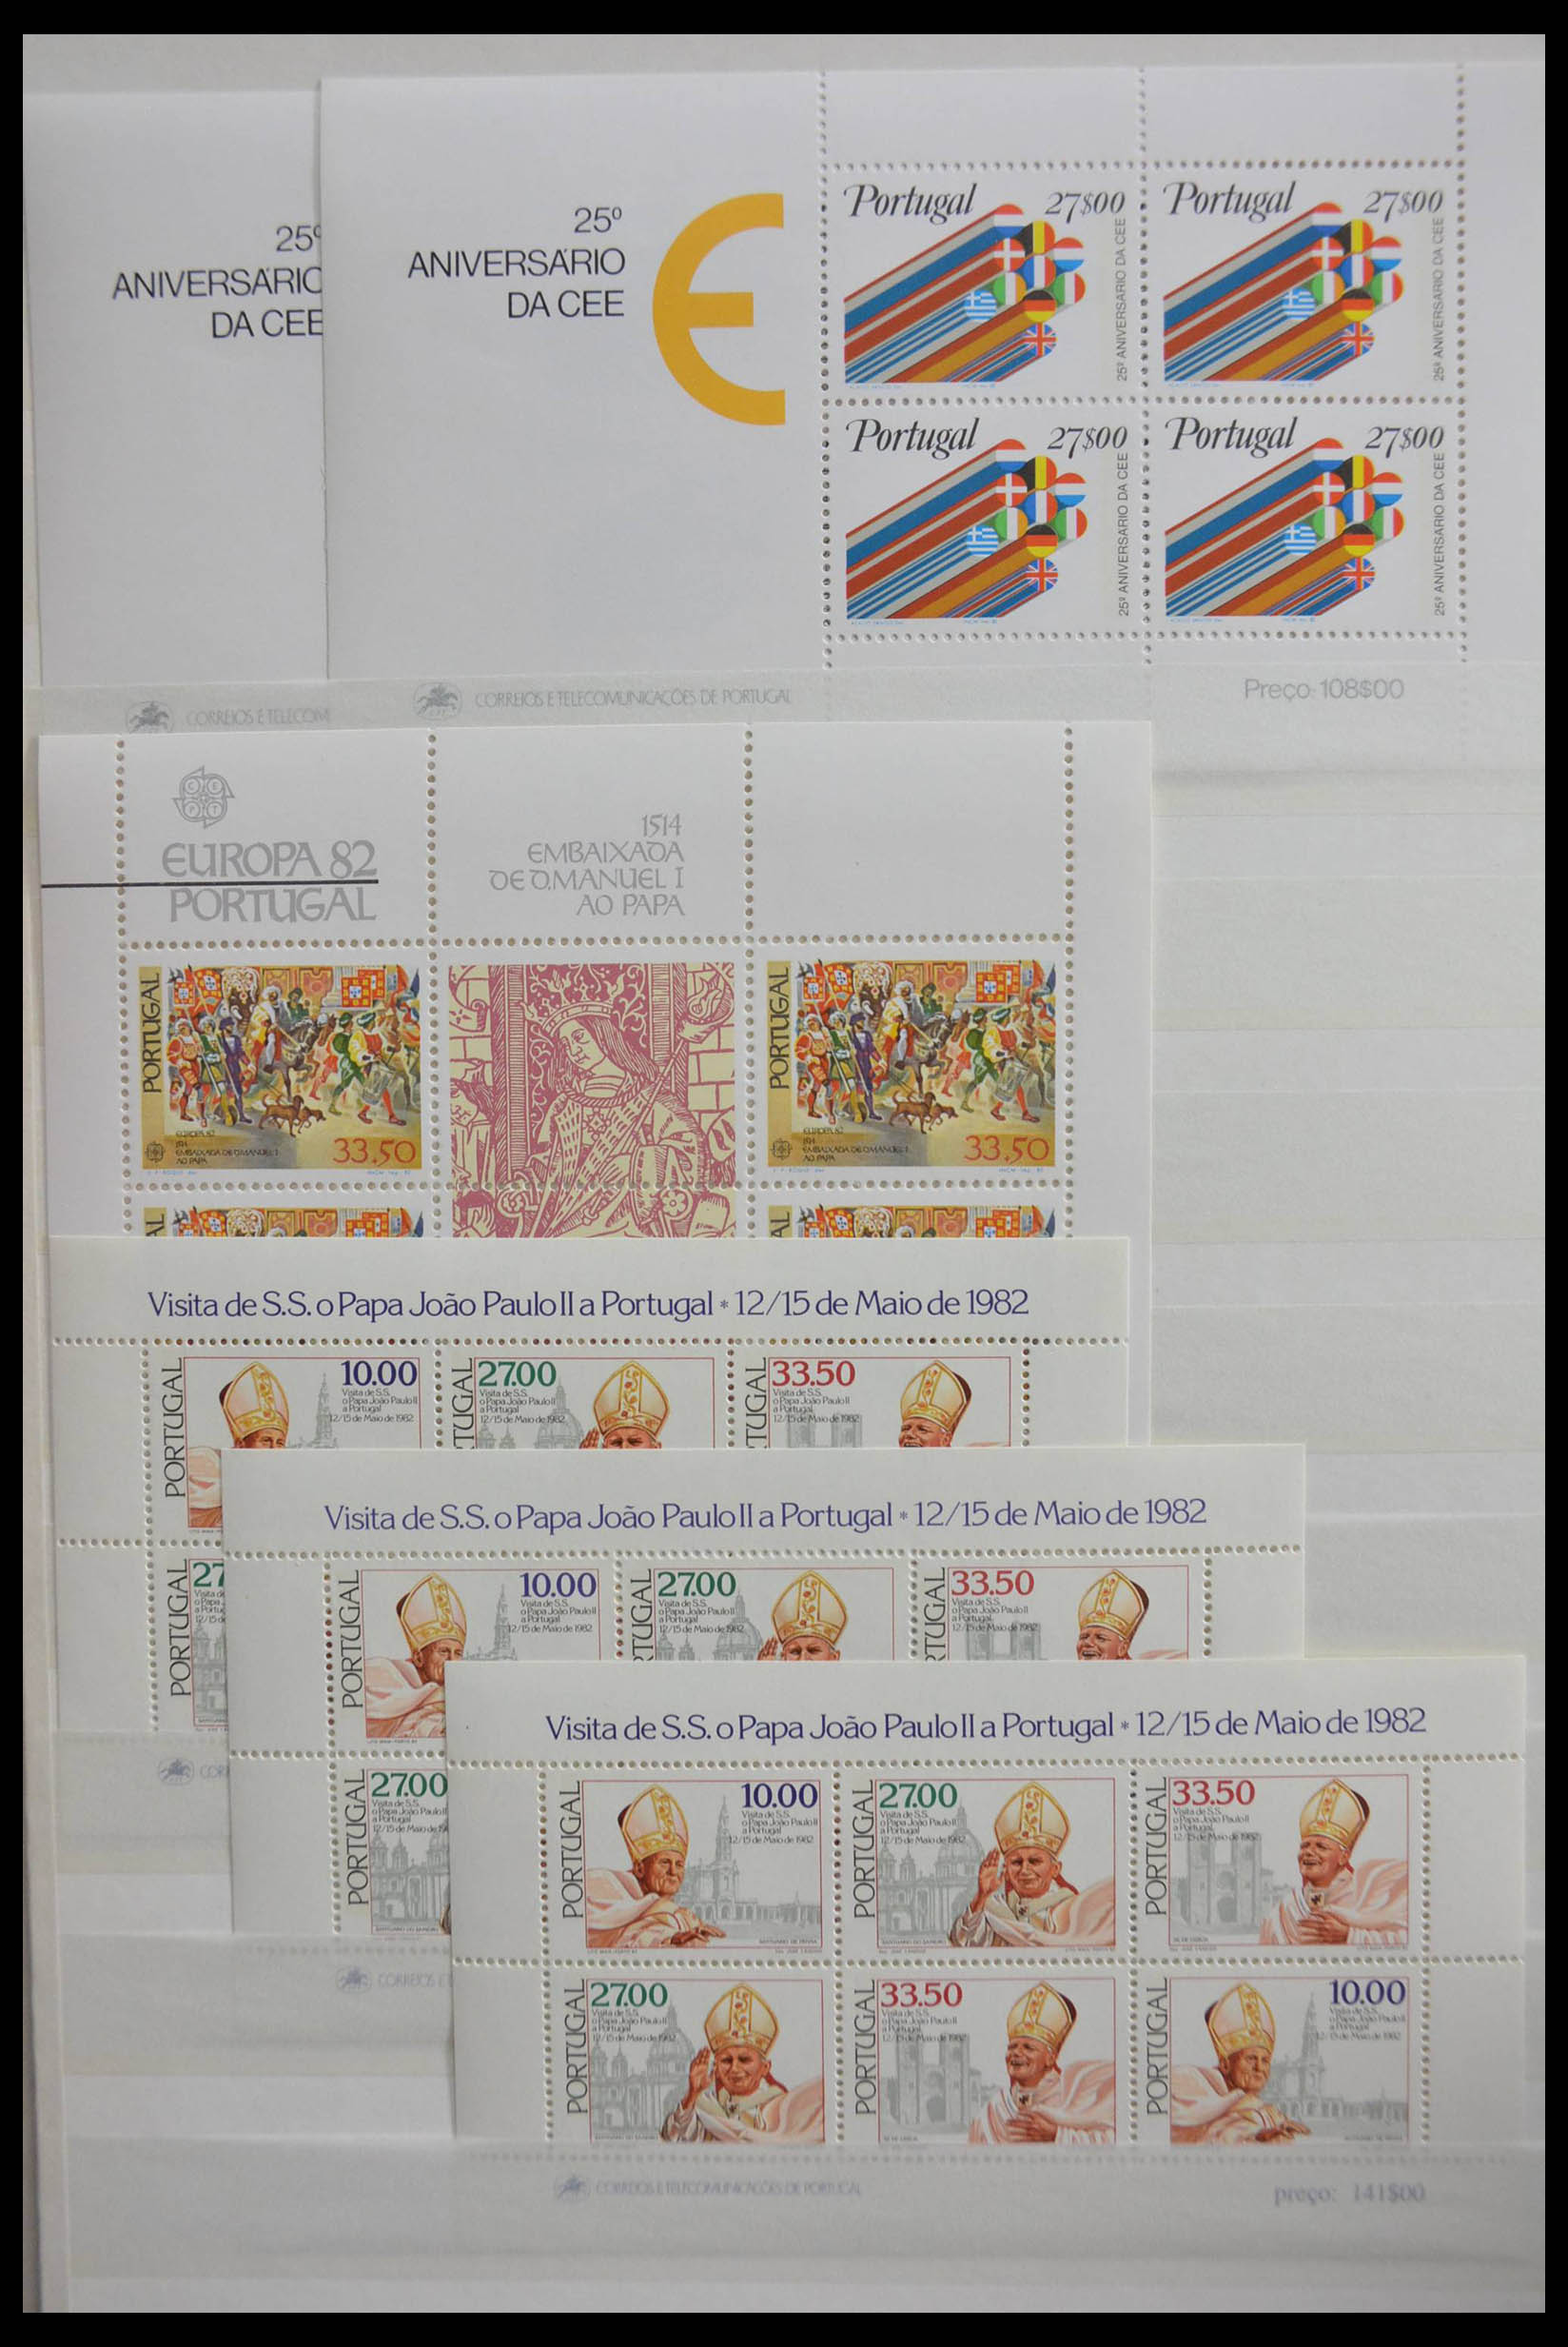 28540 064 - 28540 Portugal souvenir sheets.